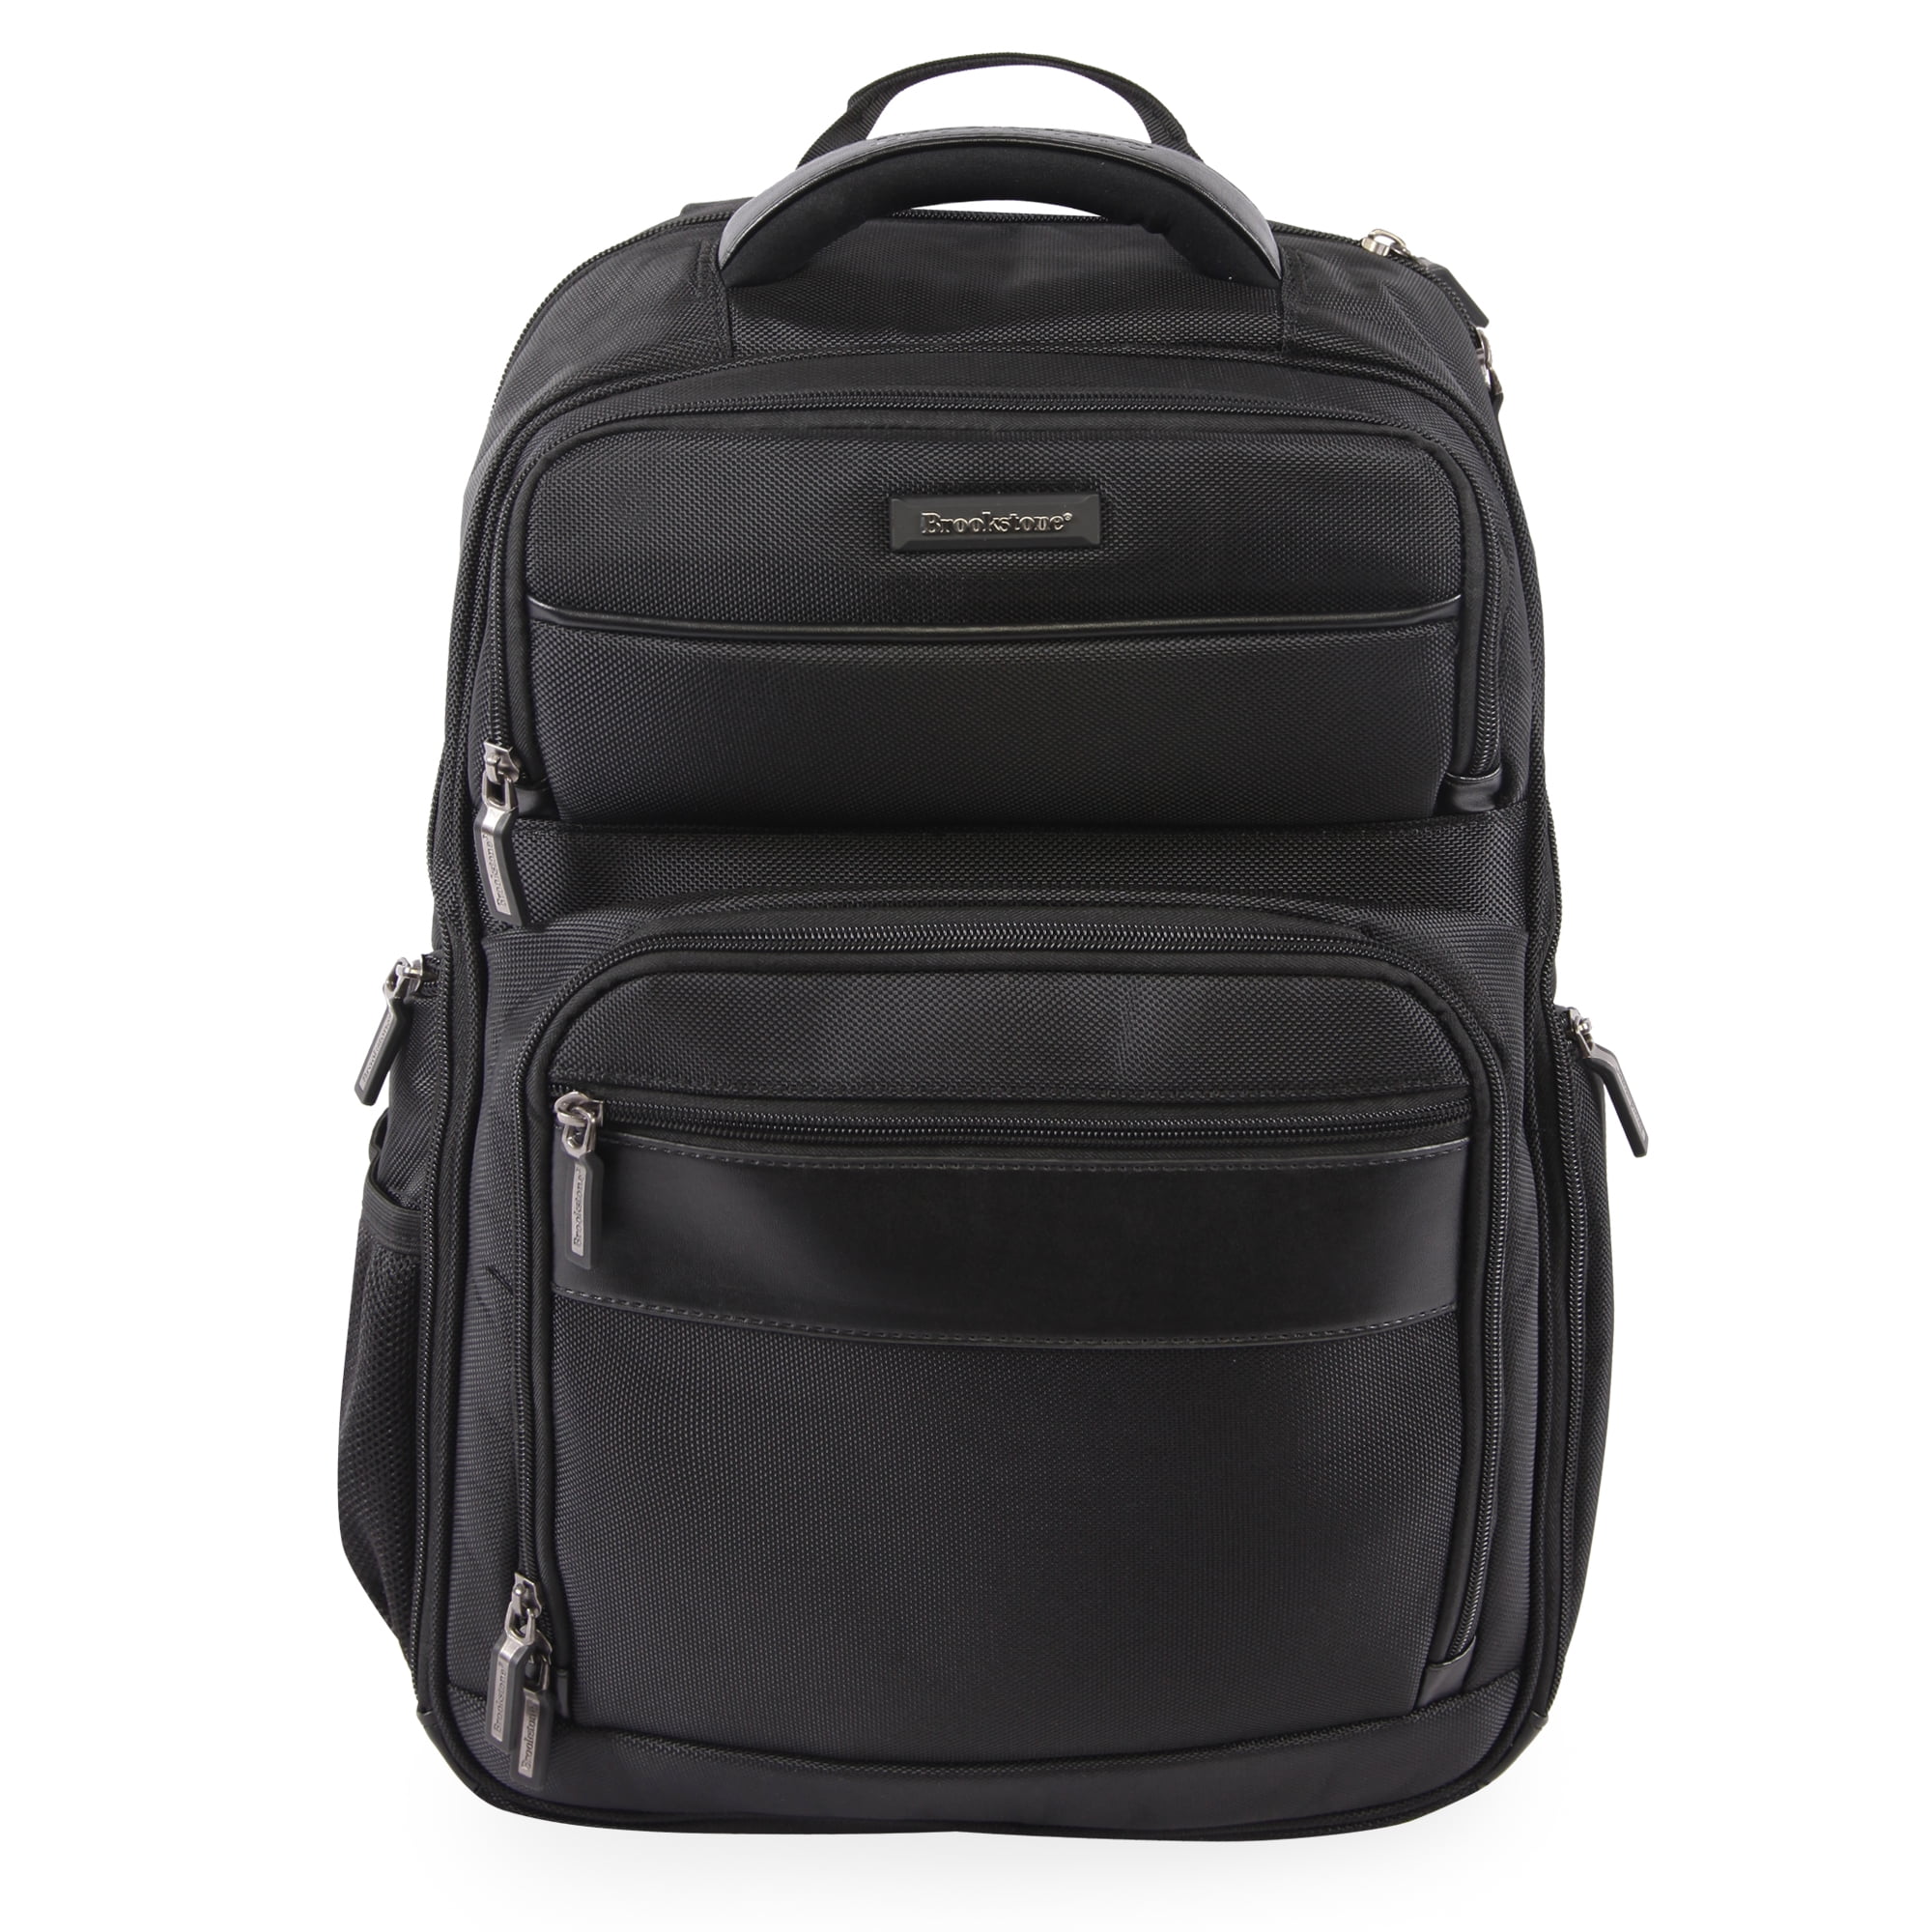 Brookstone Bryce Laptop Backpack - Black - Walmart.com